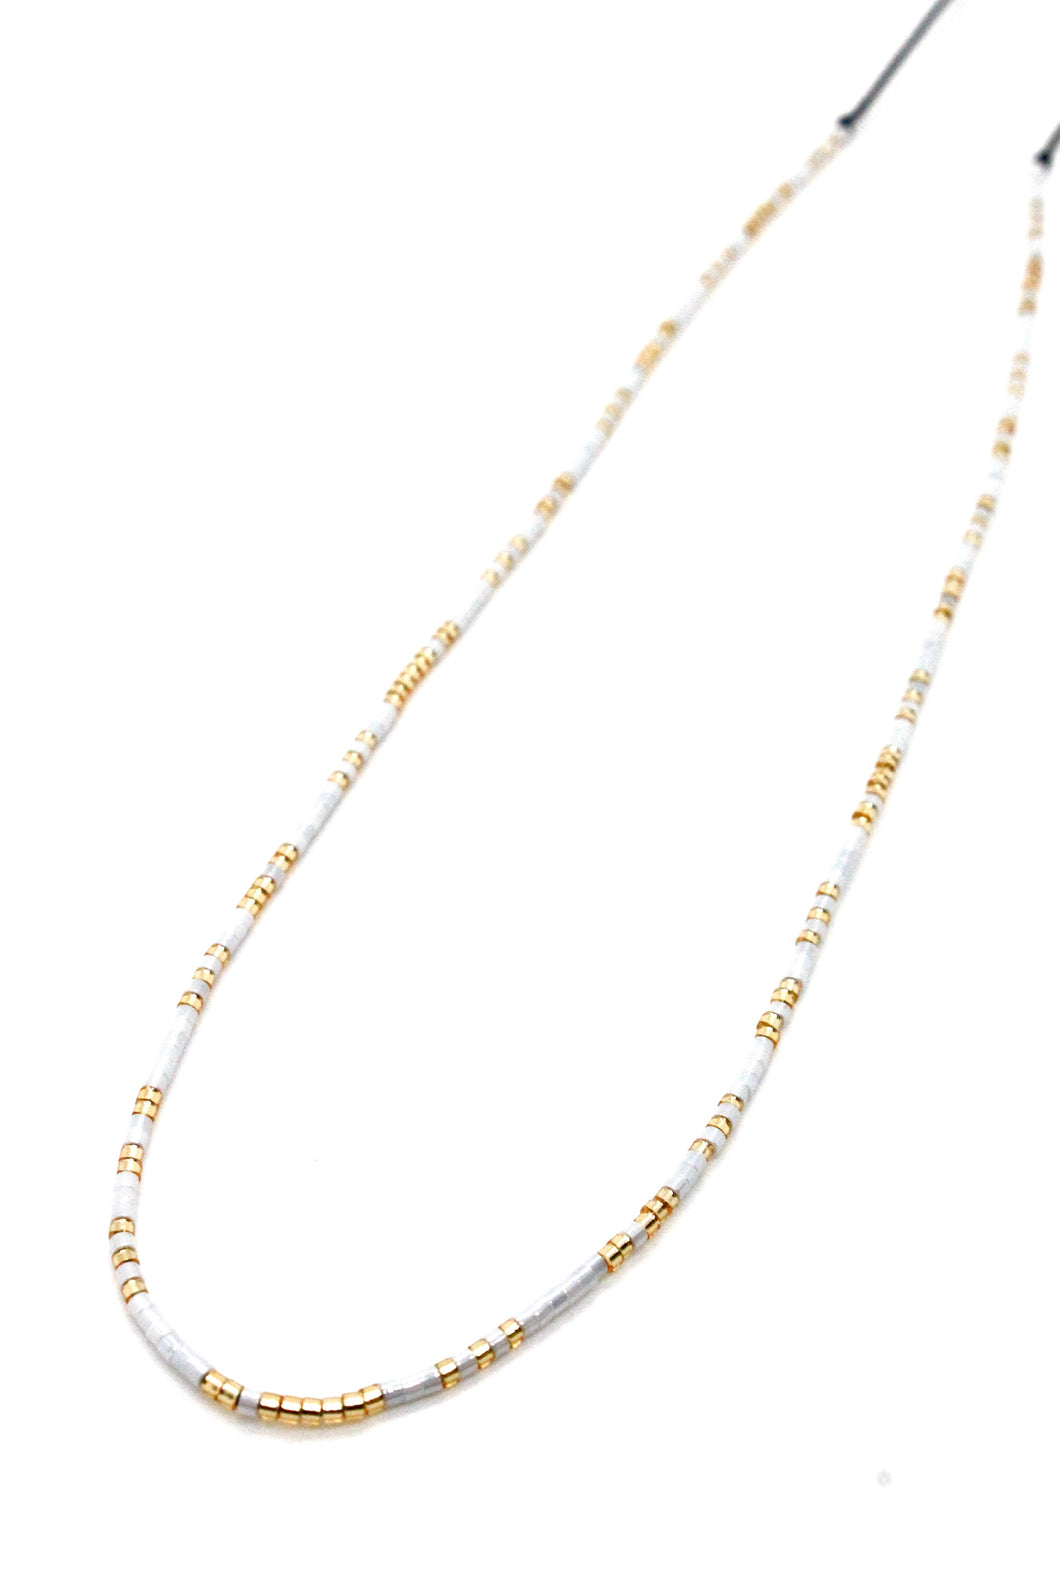 Adjustable Miyuki Seed Bead Necklace - Seeds Collection- N8-017